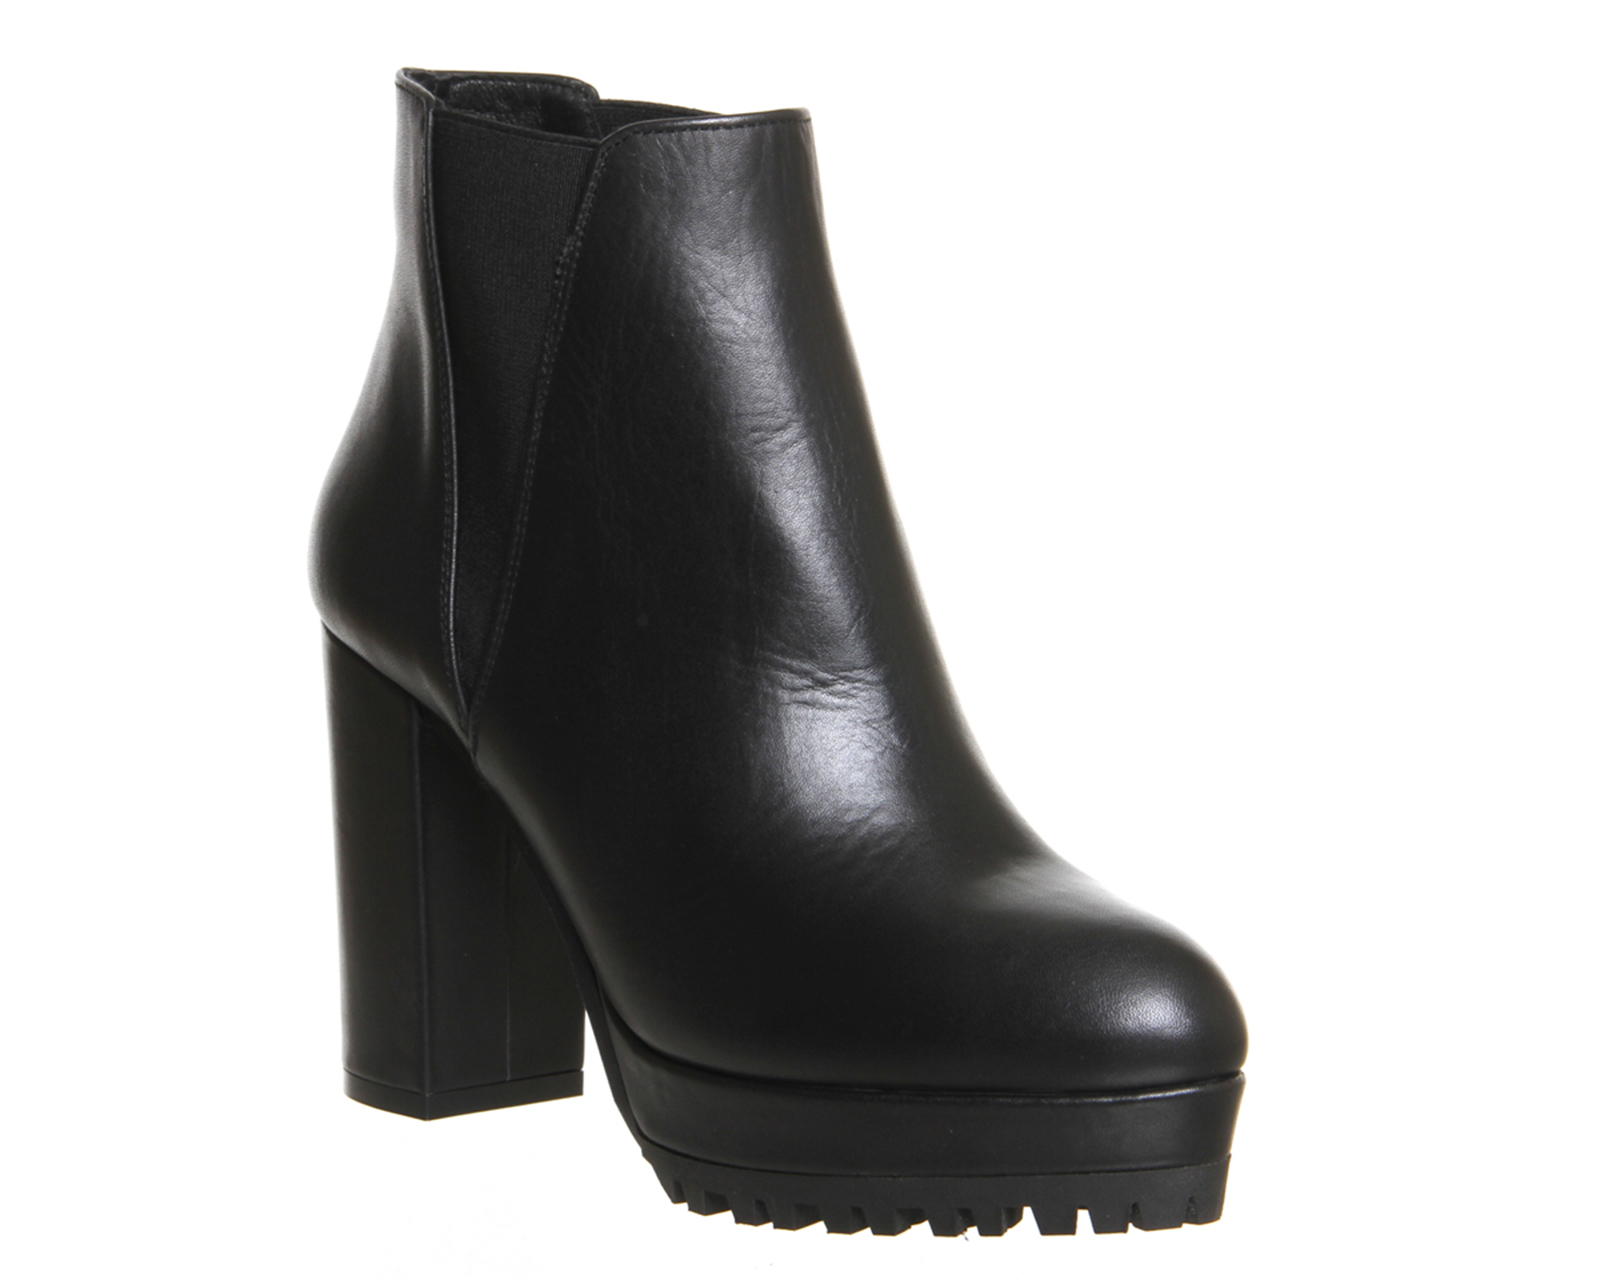 OFFICEFrontier Platform Tread Heel BootsBlack Leather